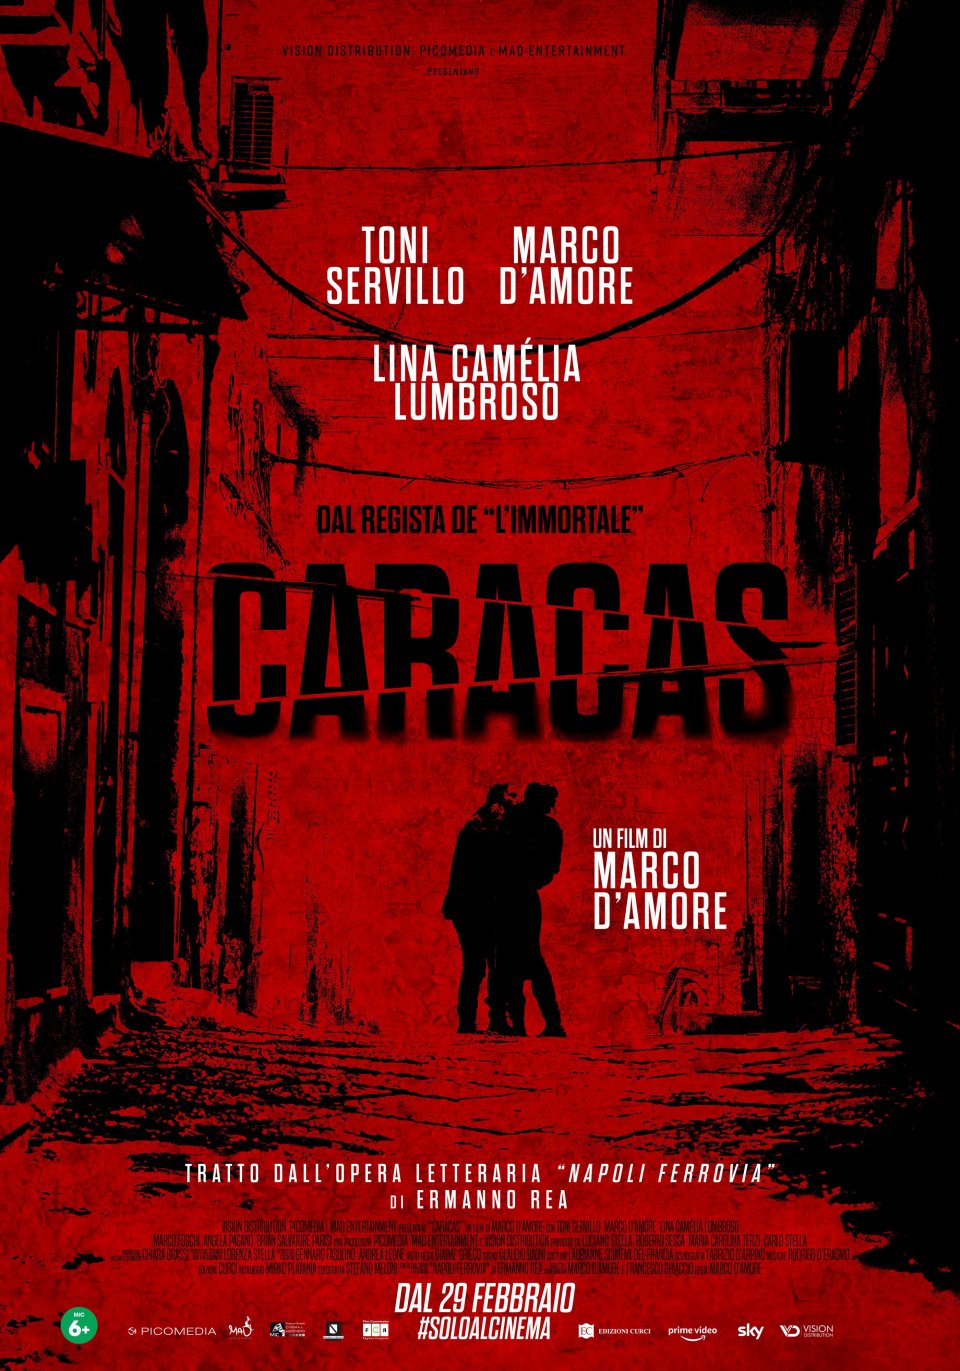 Caracas Poster